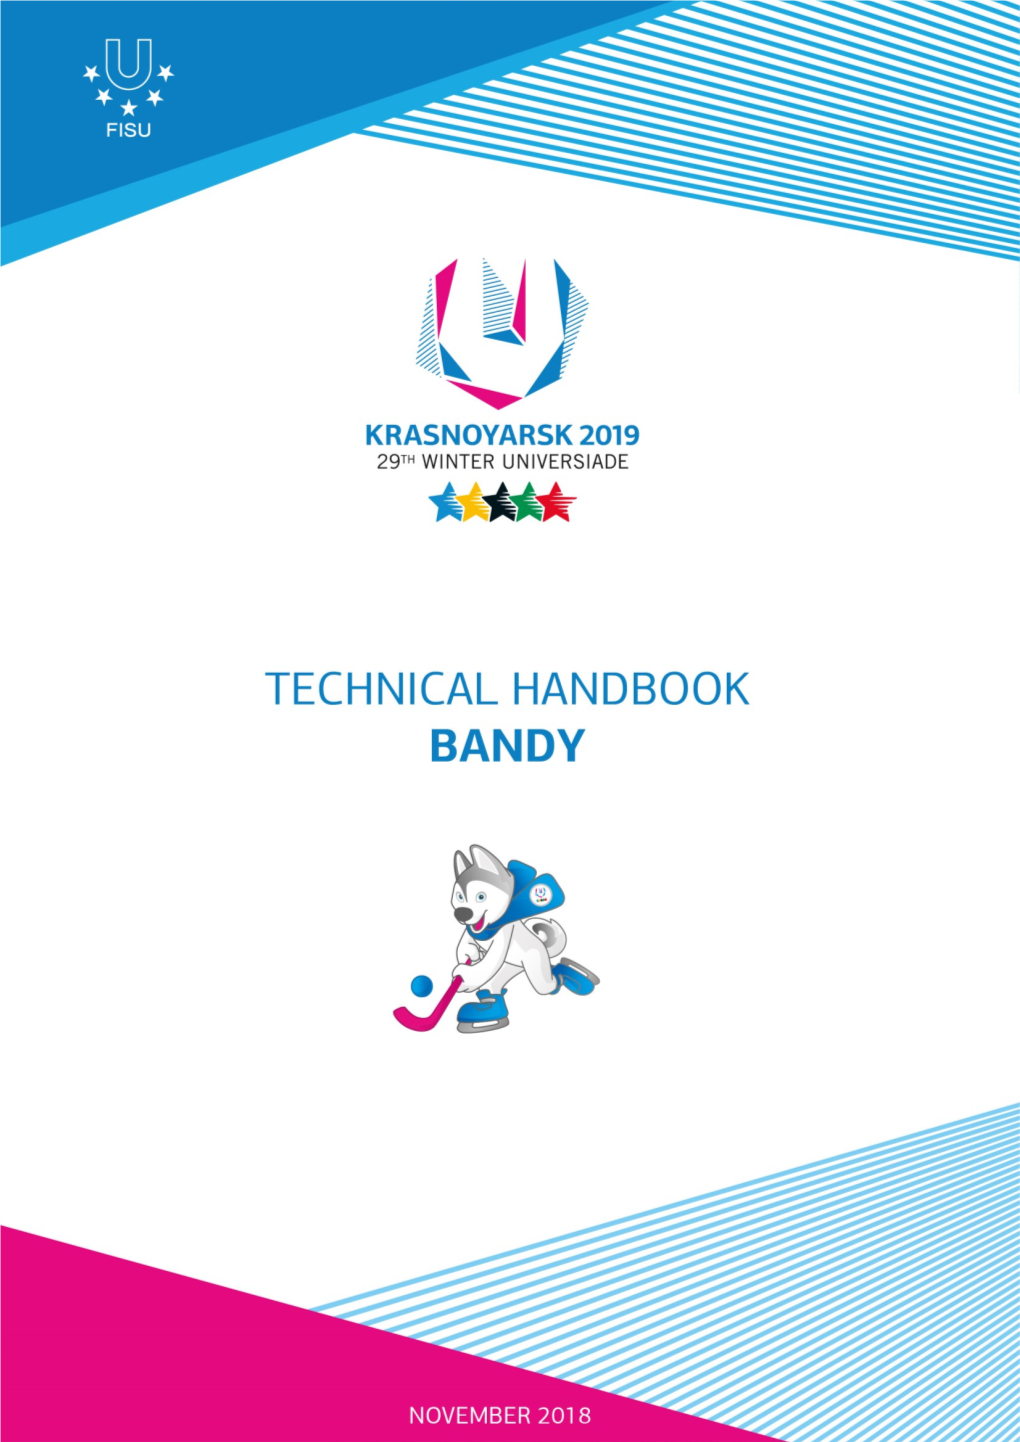 3. Fisu International Technical Committee for the Winter Universiade (Cti – Uh)